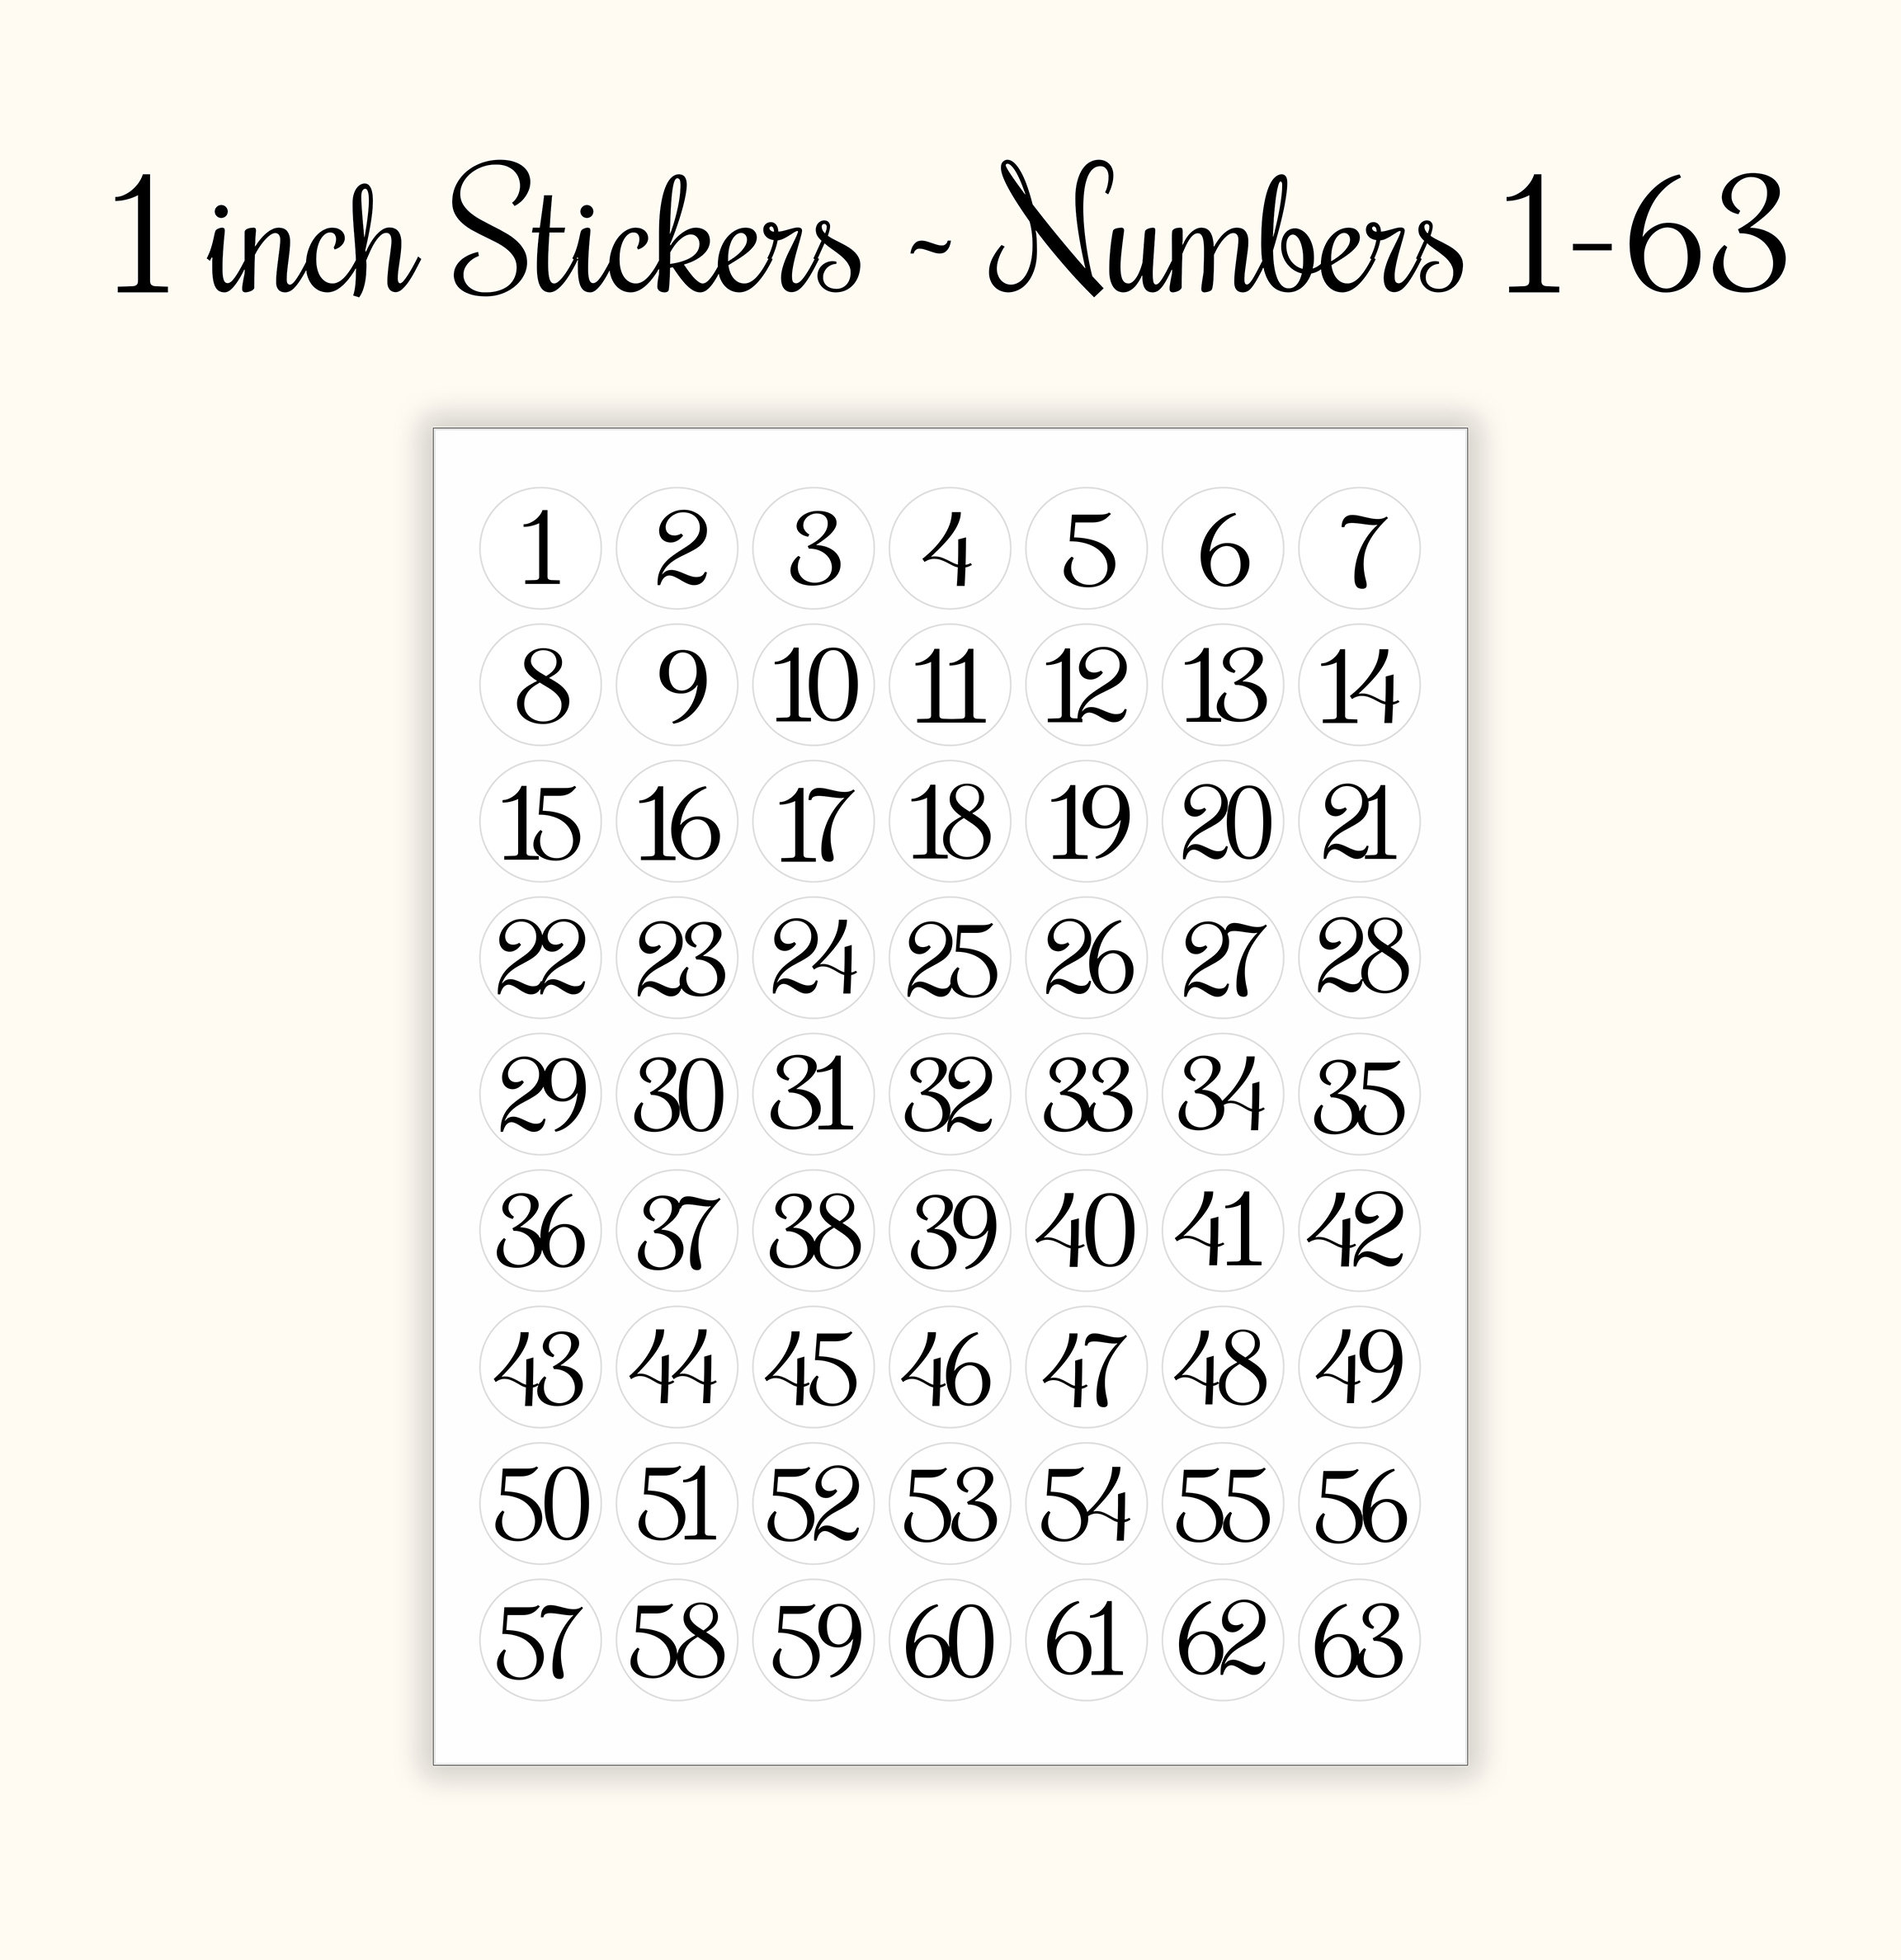 Stick 'n Stitch™ - 8 1/2'' x 11'' - 12 Printable Sheets